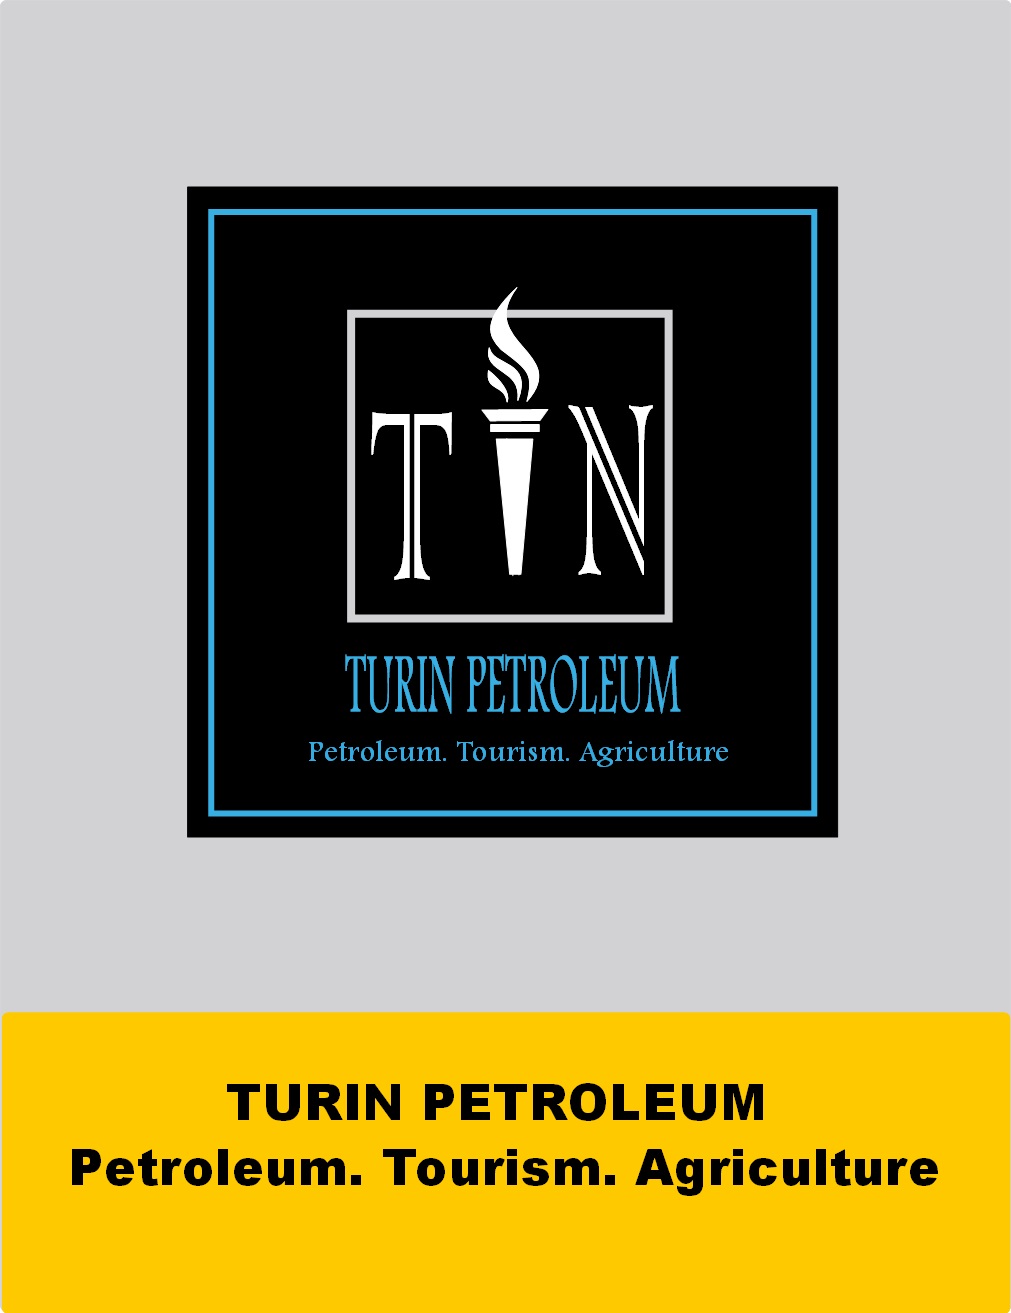 Turin Petroleum